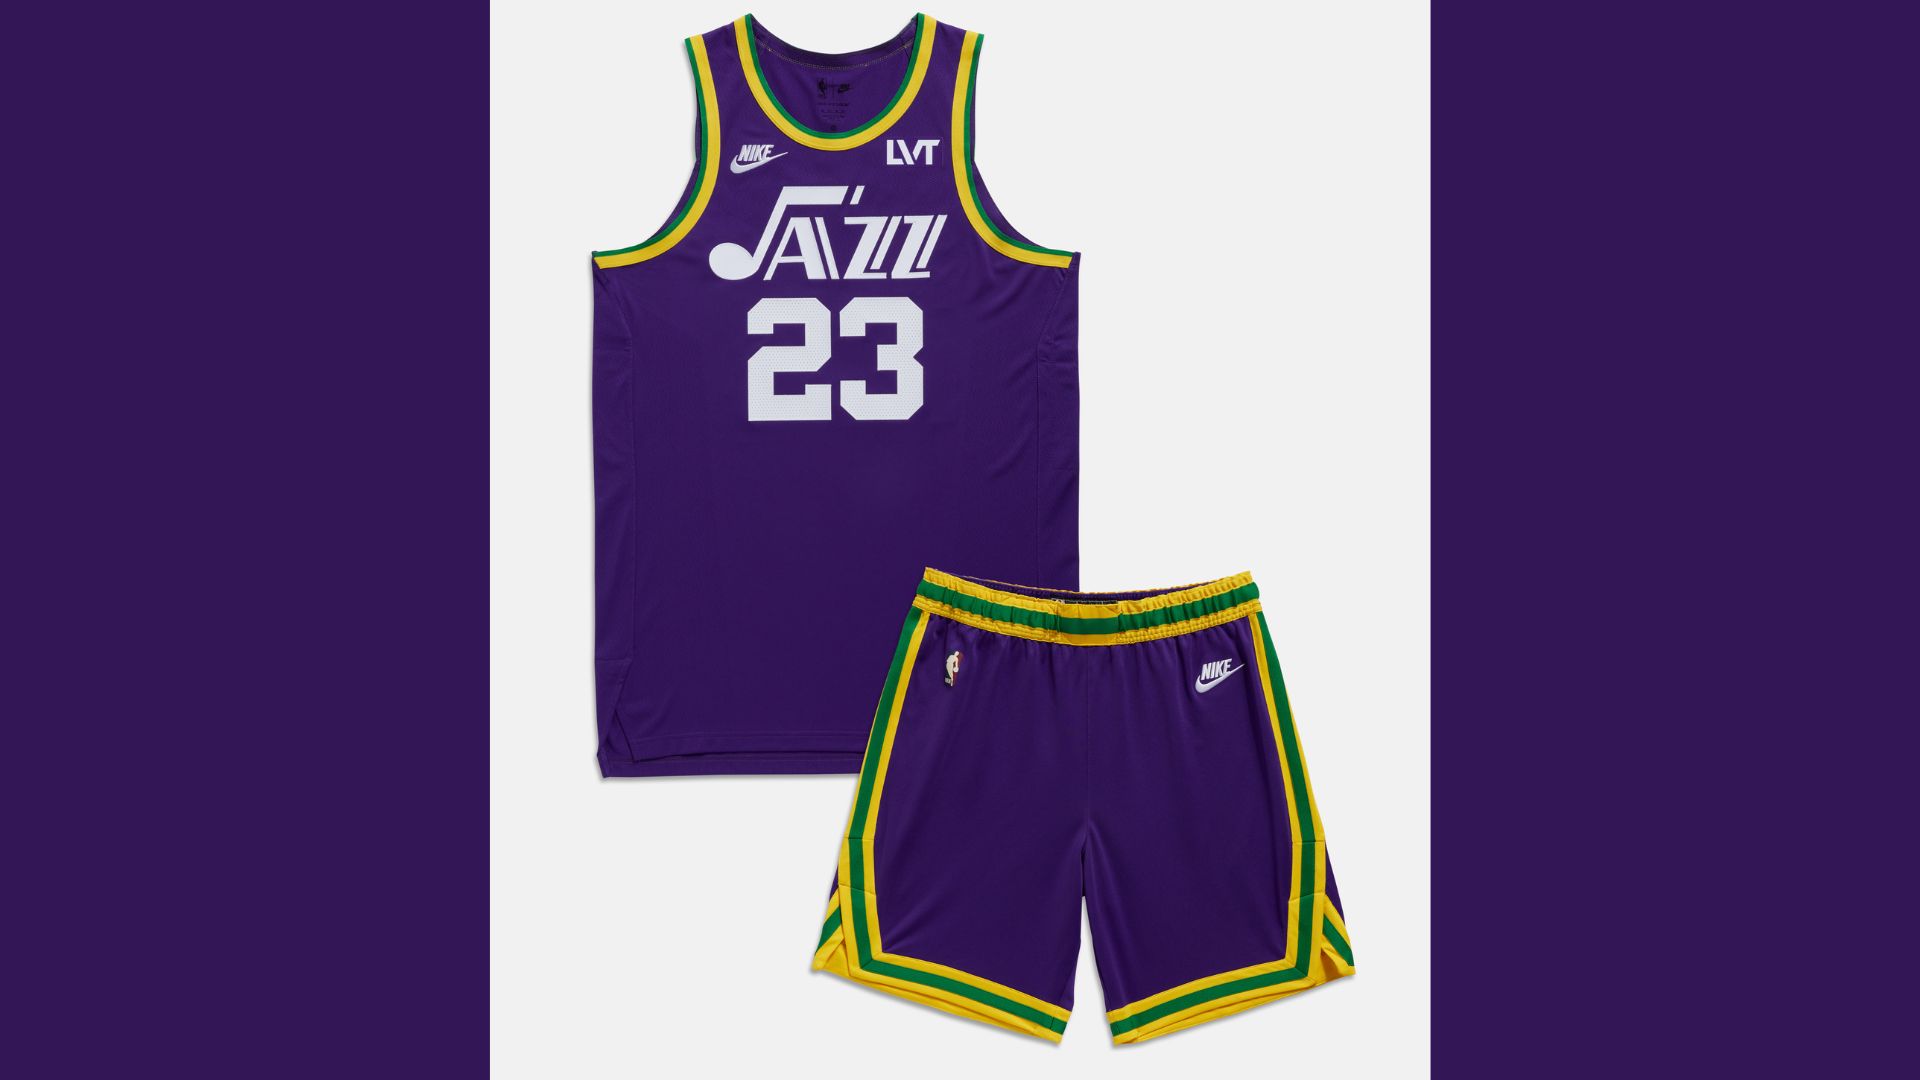 Utah Jazz debut anniversary uniforms, upcoming plans for 50th